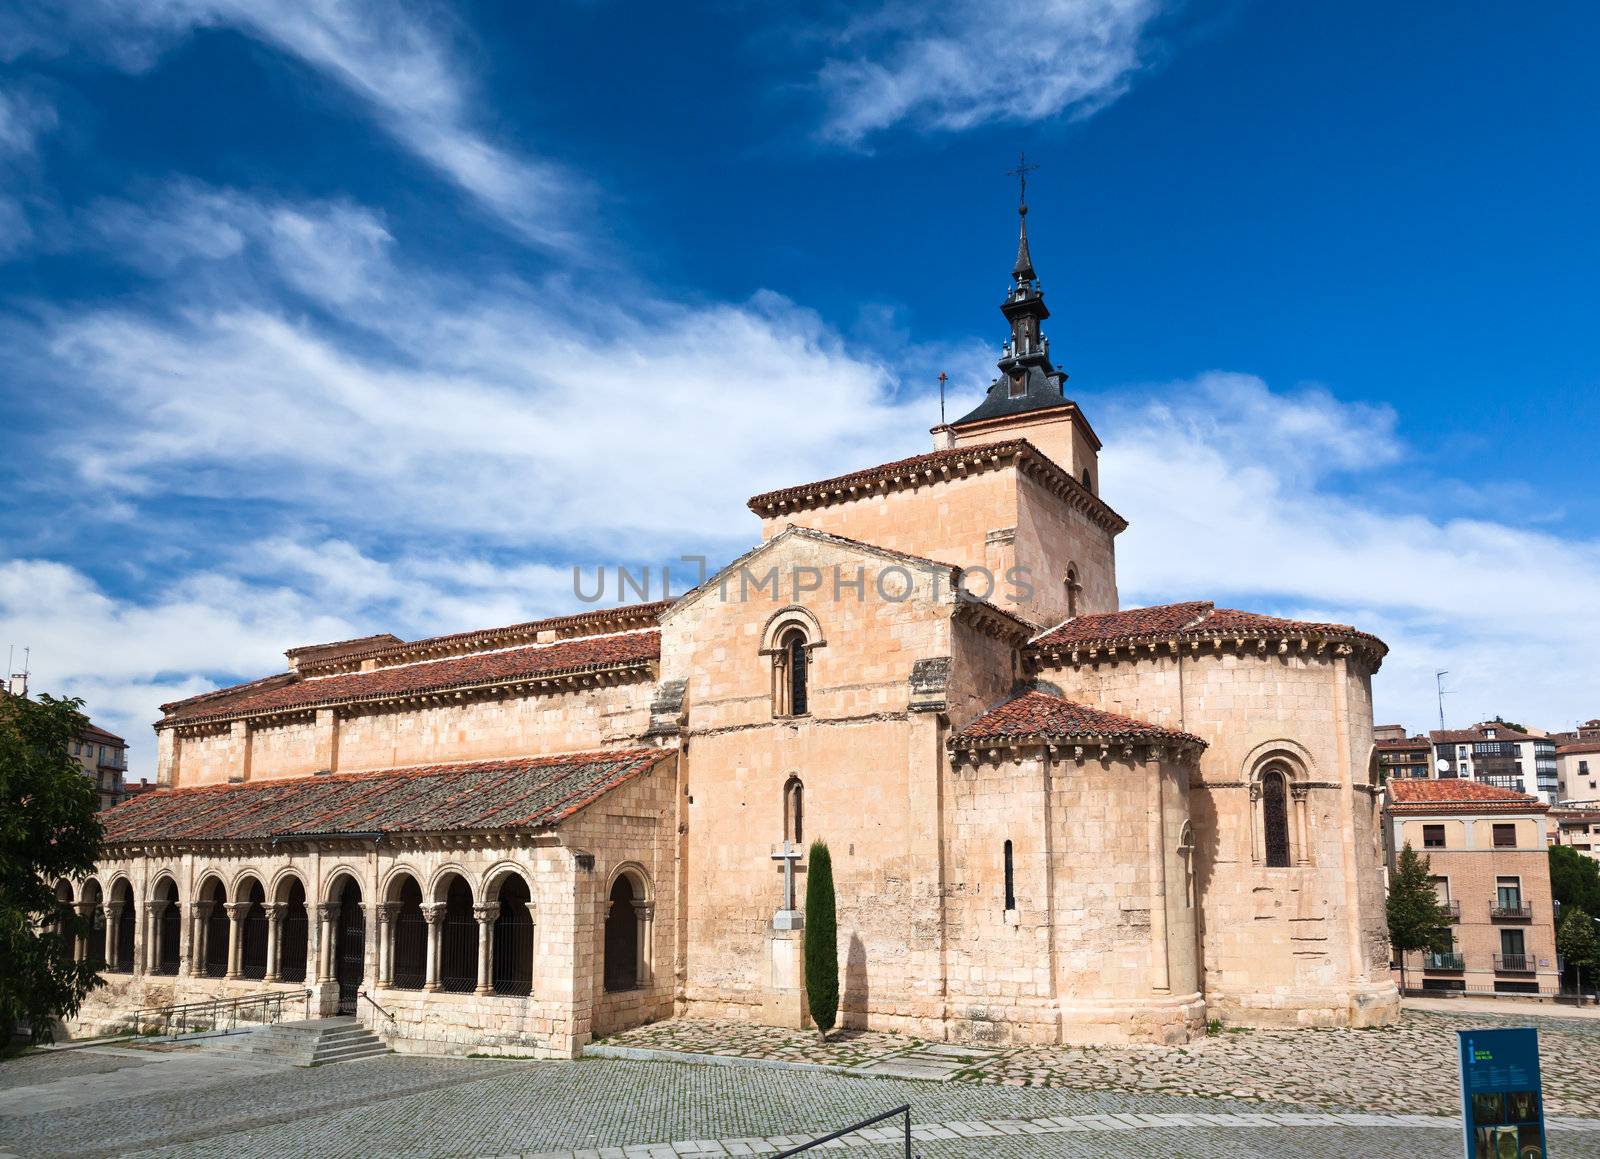 an ancient church in Segovia, by gary718